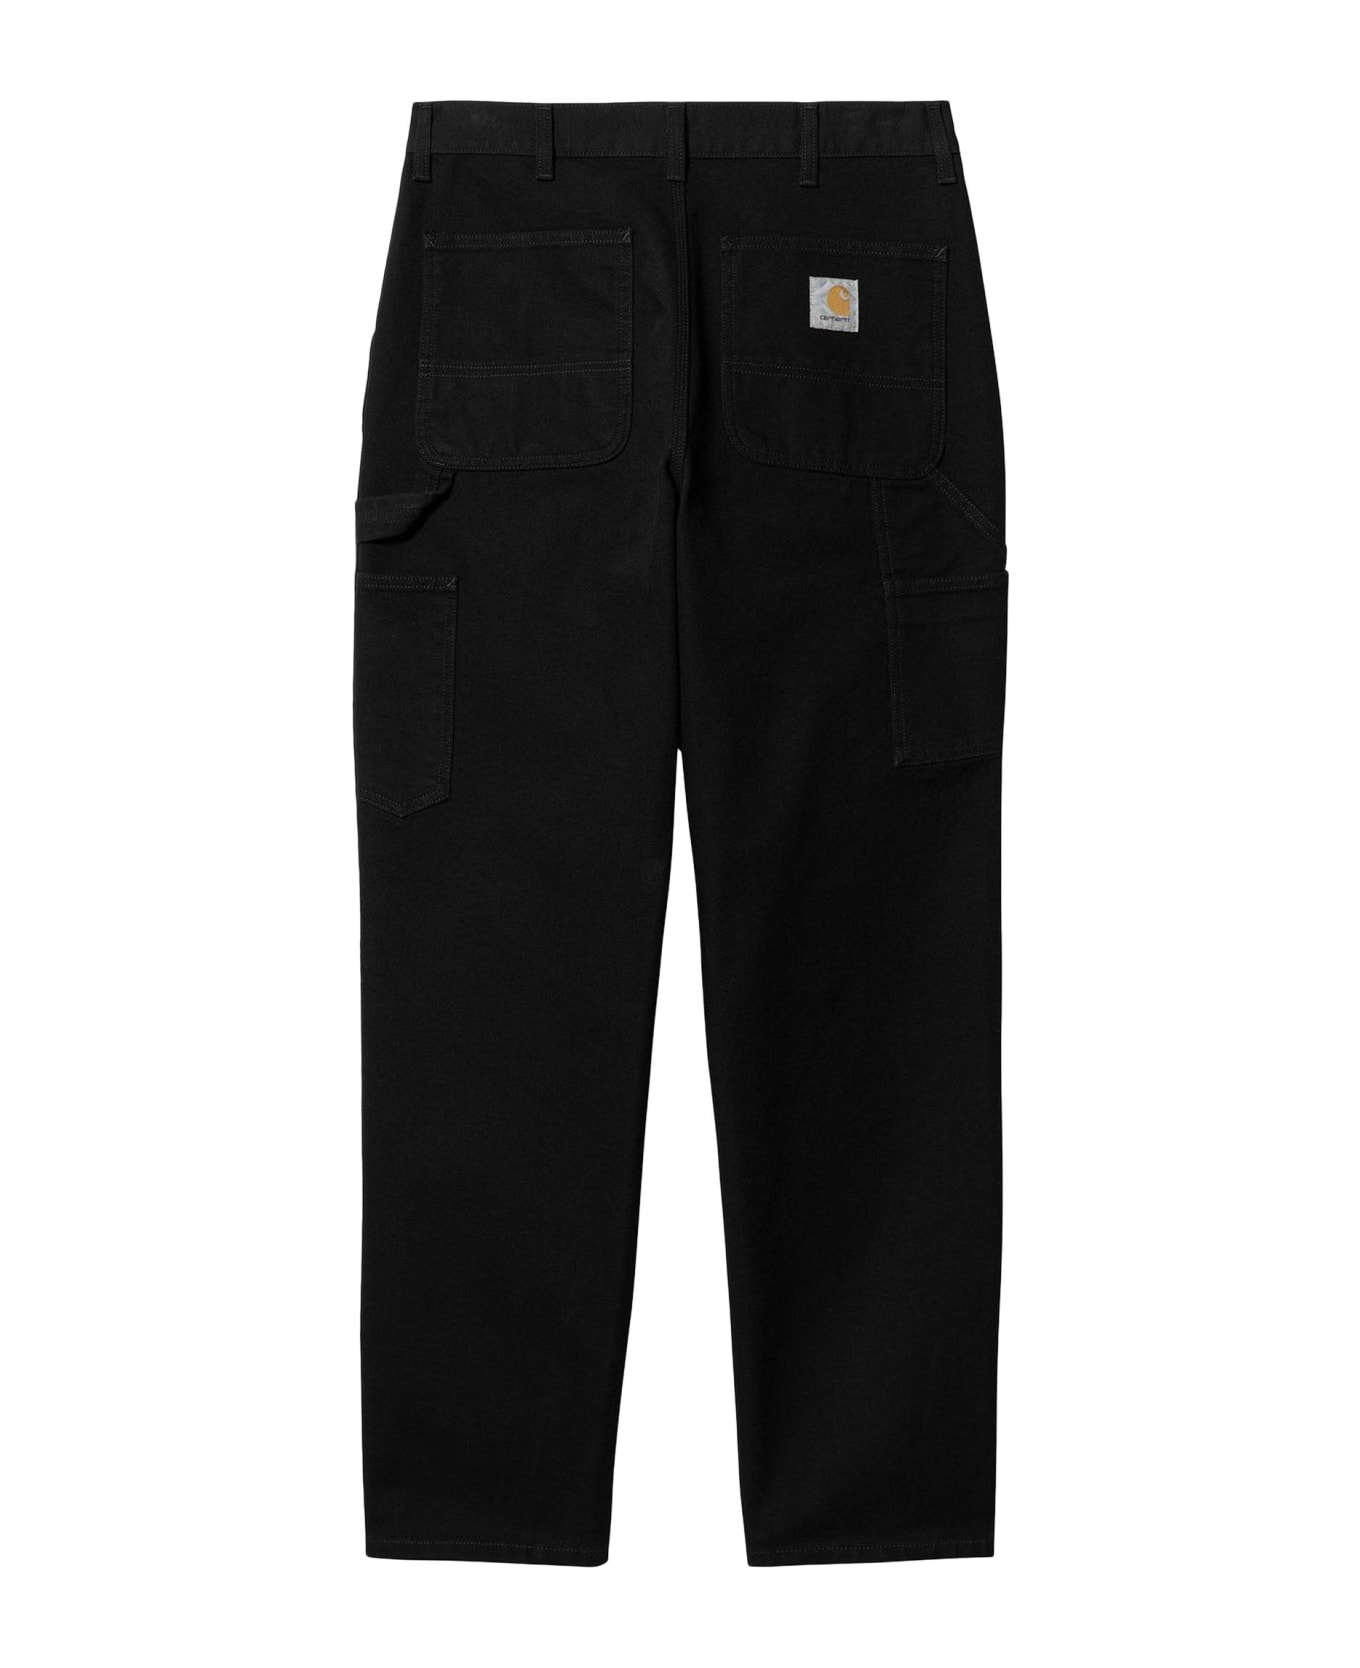 Carhartt Trousers Black - Black